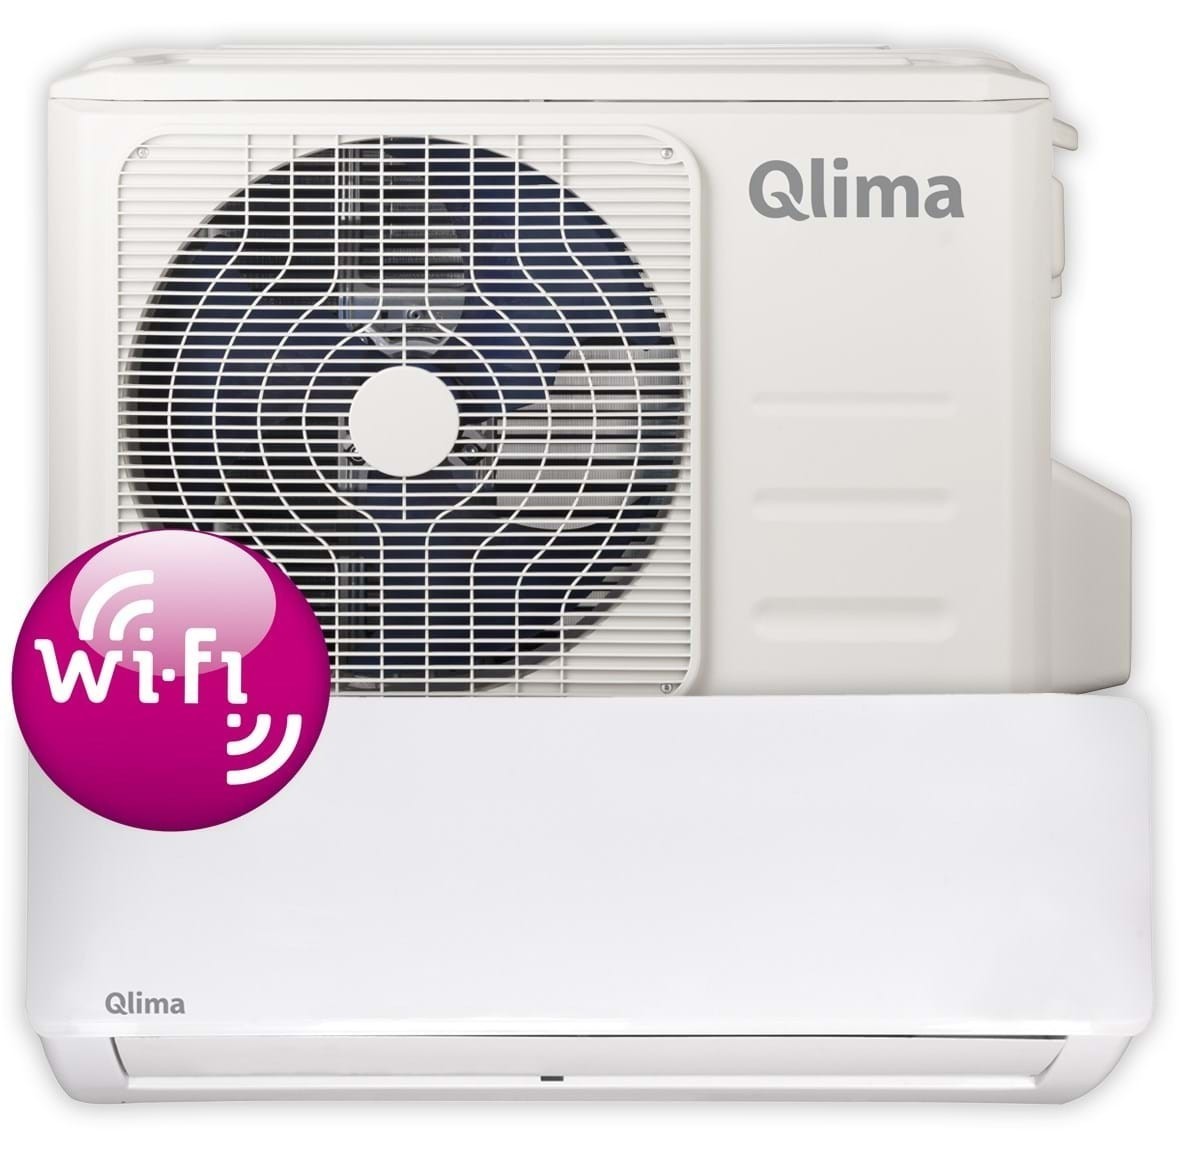 Qlima SC5248 Split Airco WiFi Compleet | Wandmodel Airconditioner | Airco en Verwarming